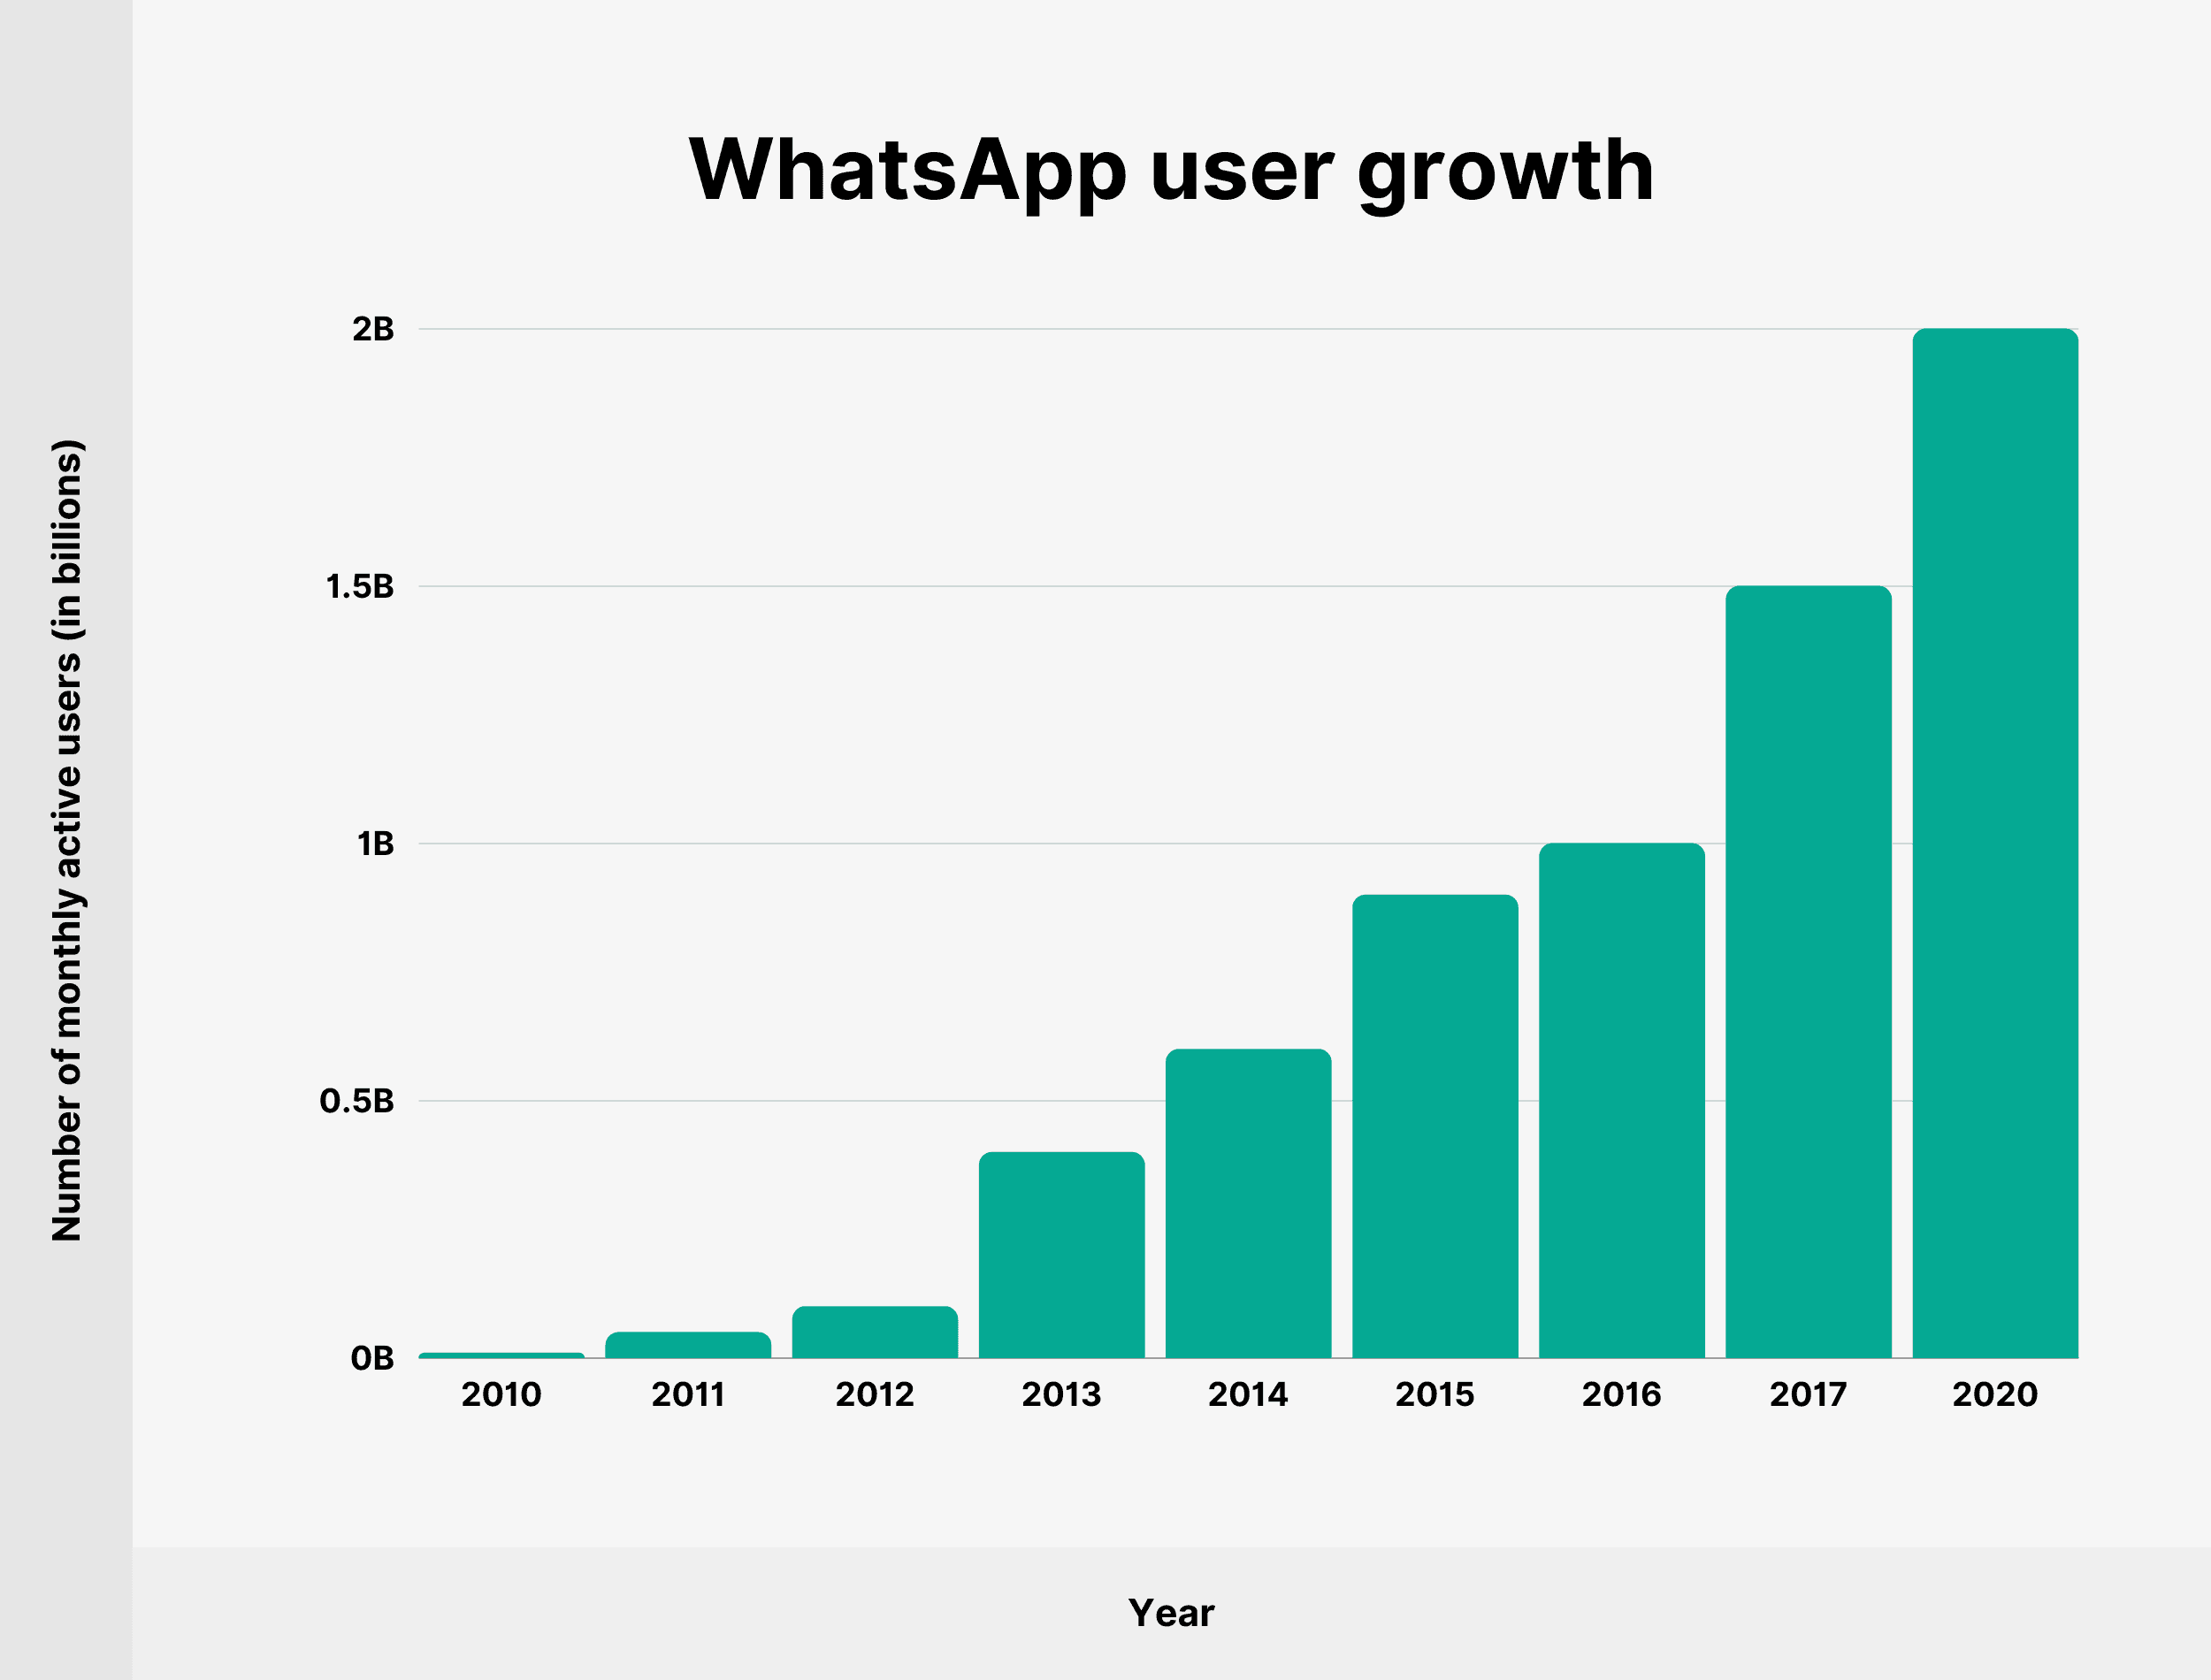 WhatsApp user growth